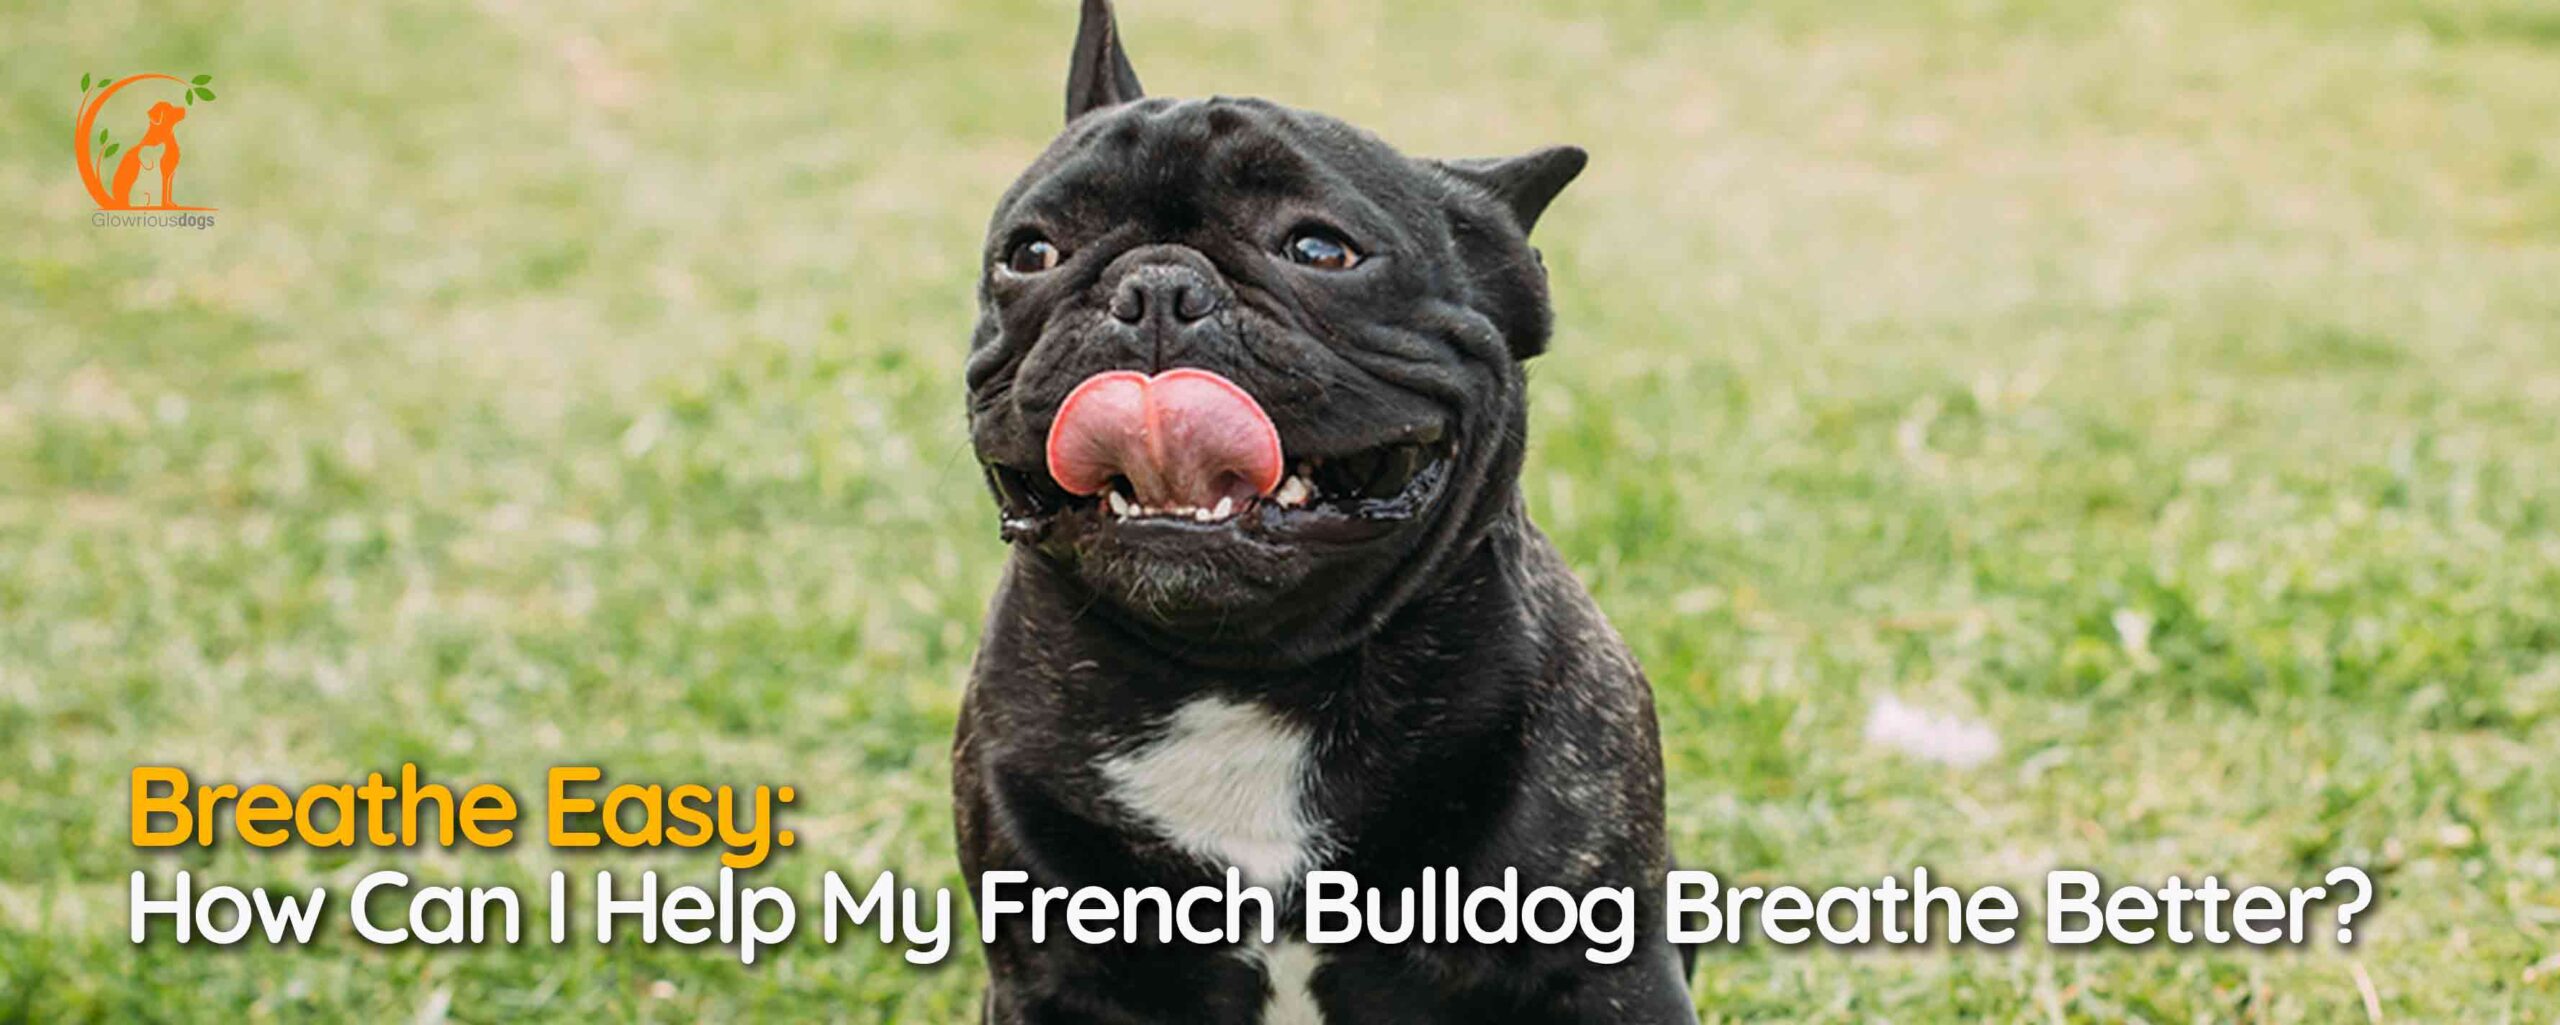 Breathe Easy: How Can I Help My French Bulldog Breathe Better?